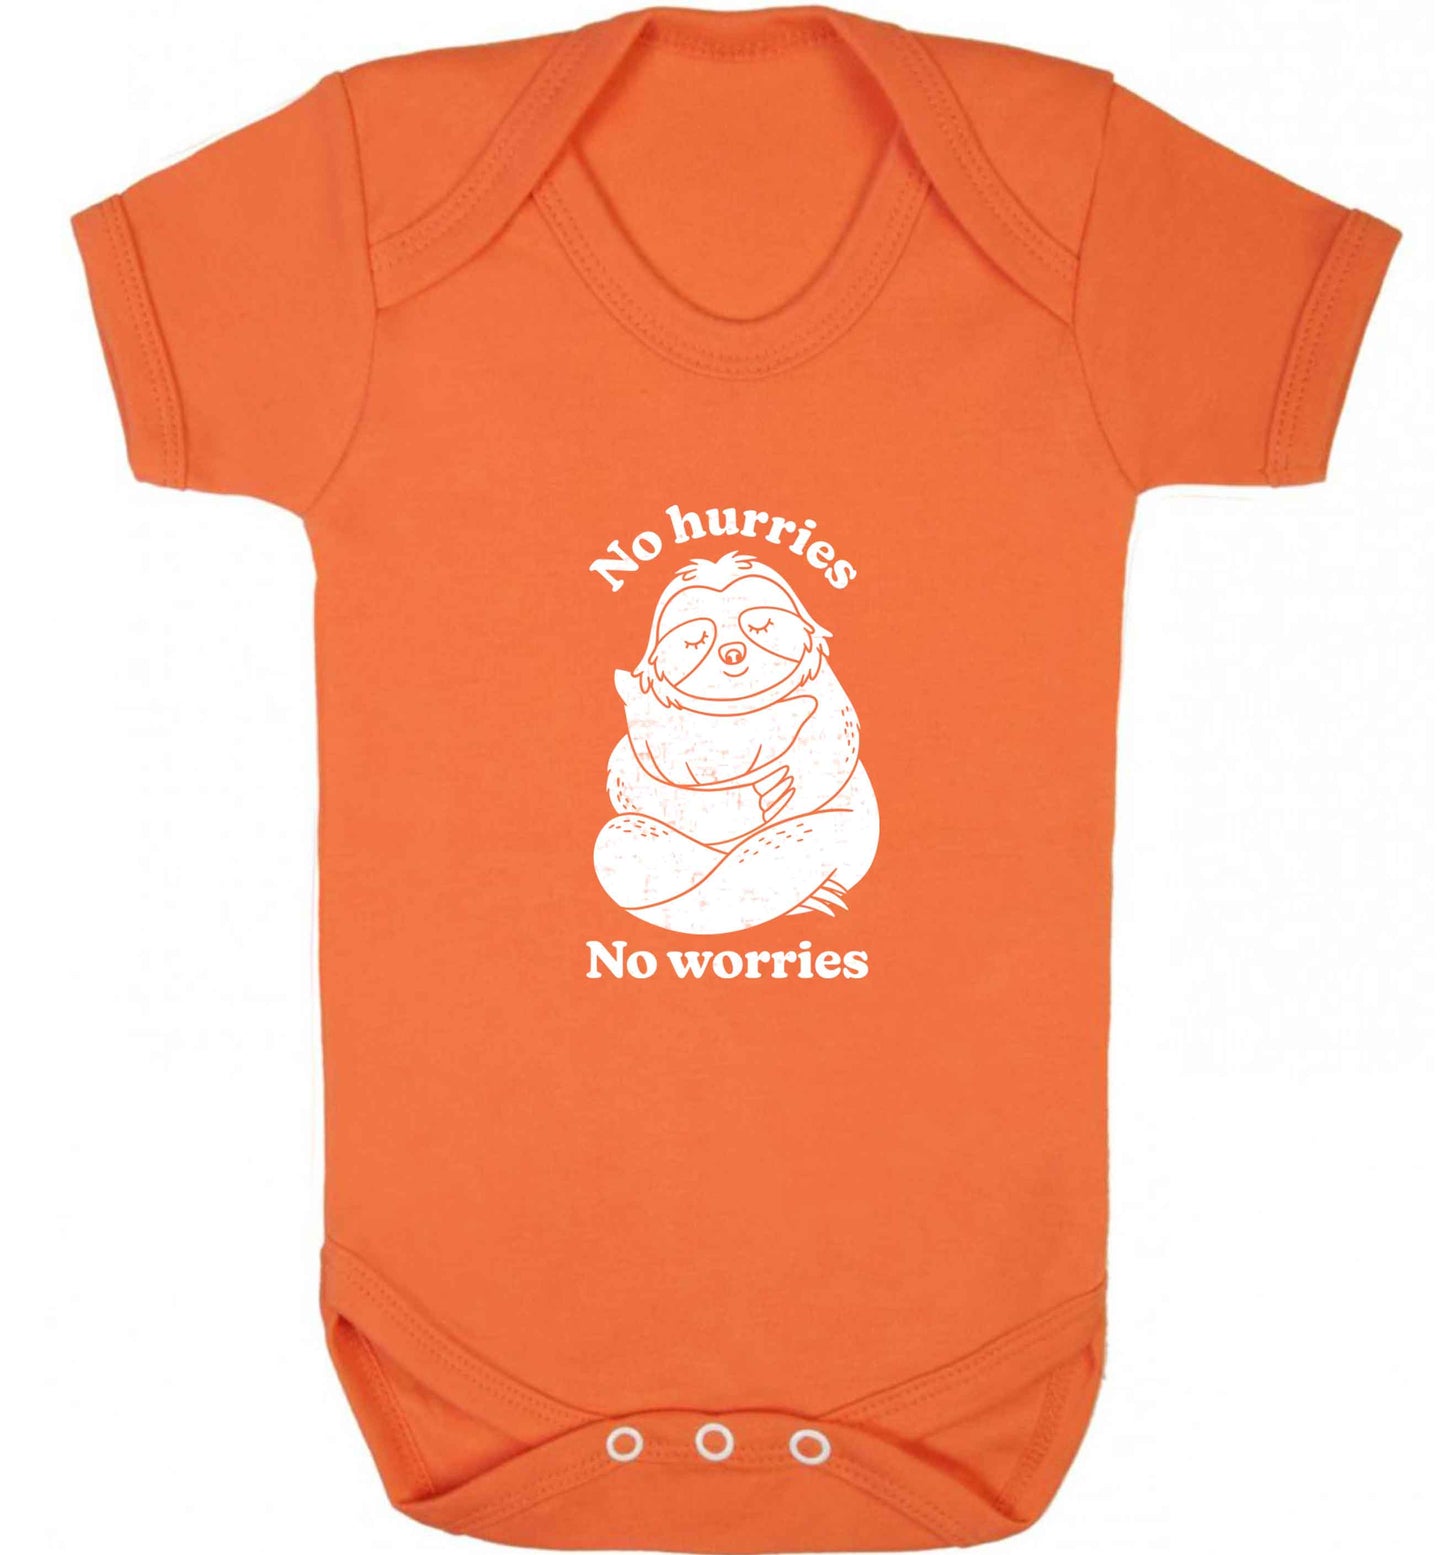 No hurries no worries baby vest orange 18-24 months